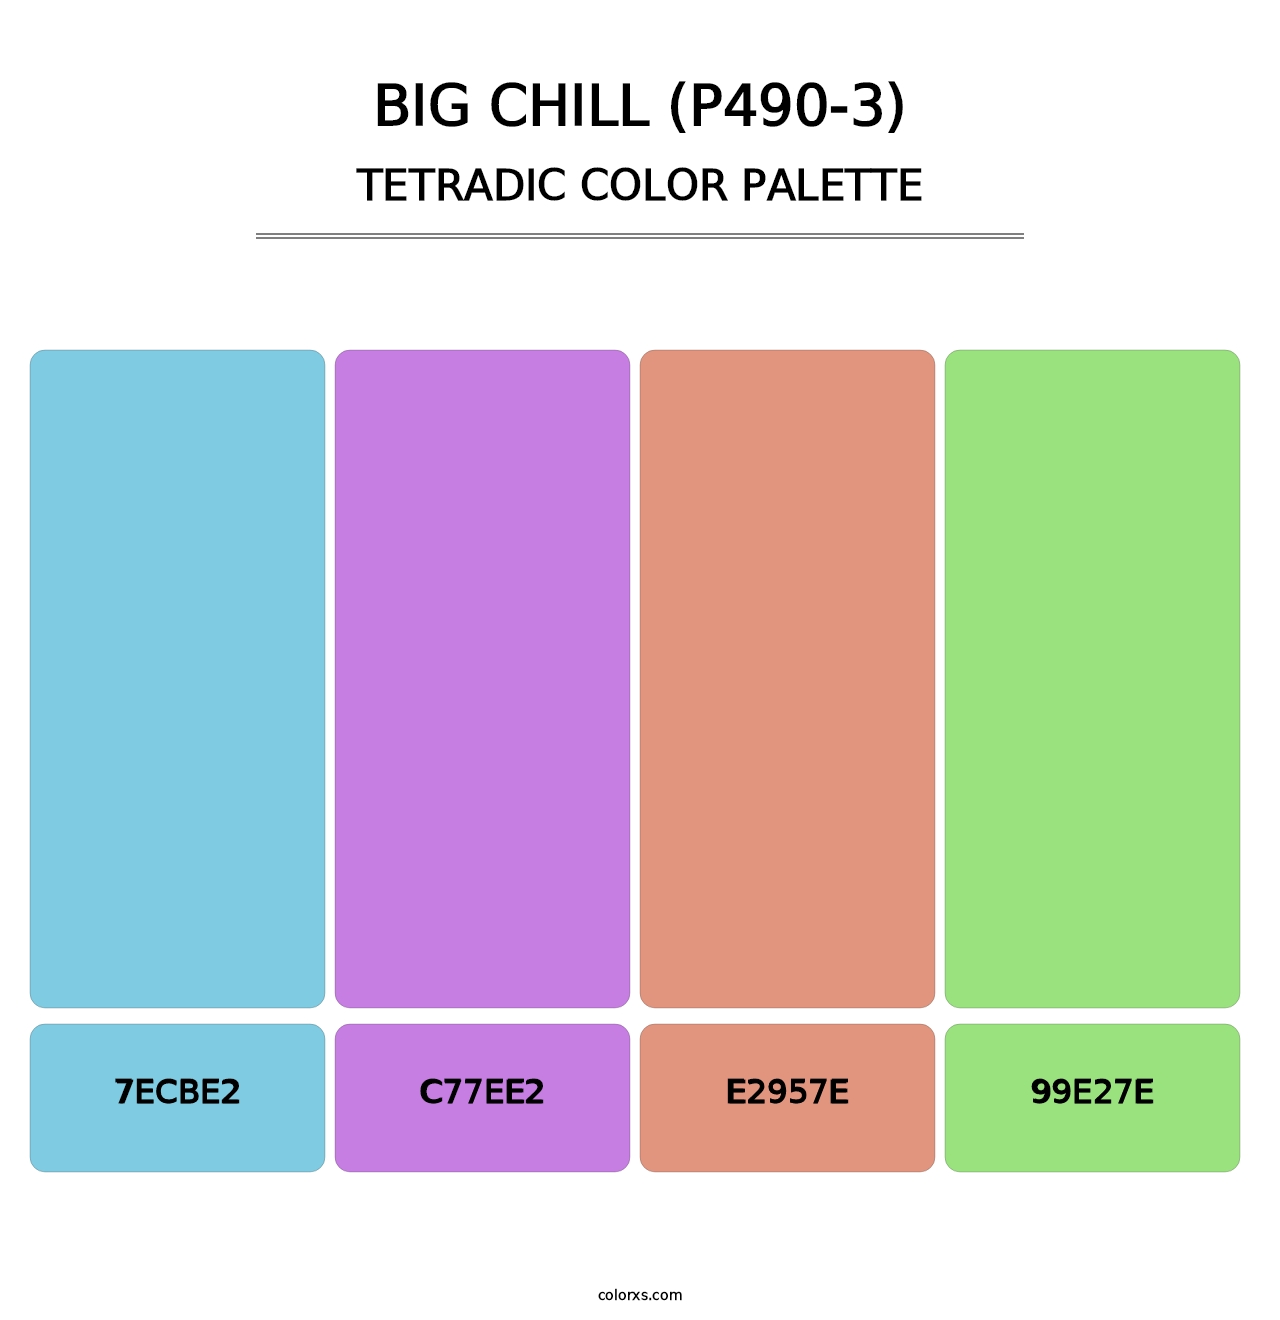 Big Chill (P490-3) - Tetradic Color Palette